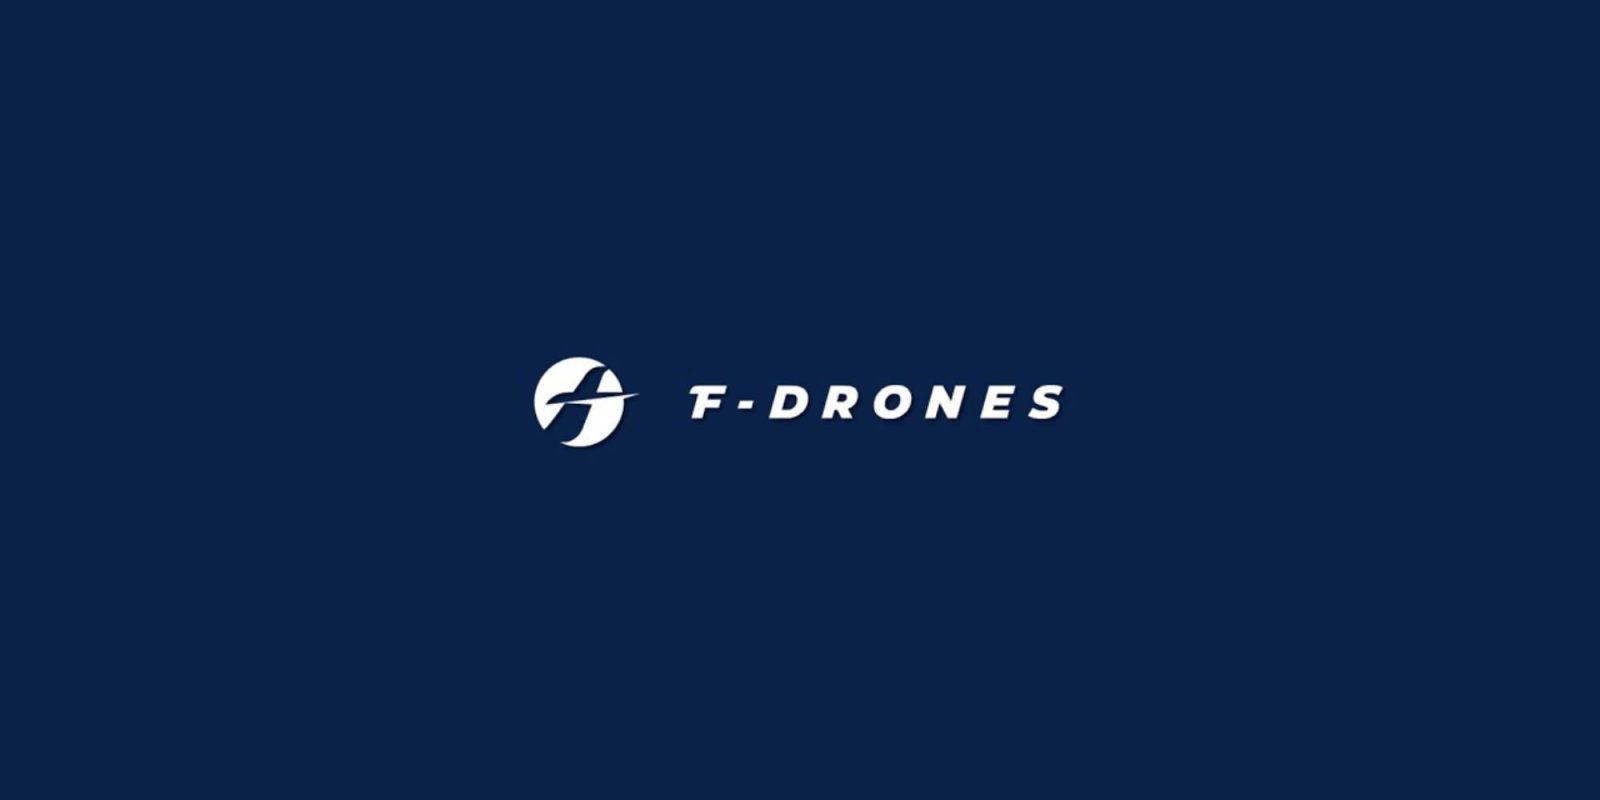 F-drones 100 test flights